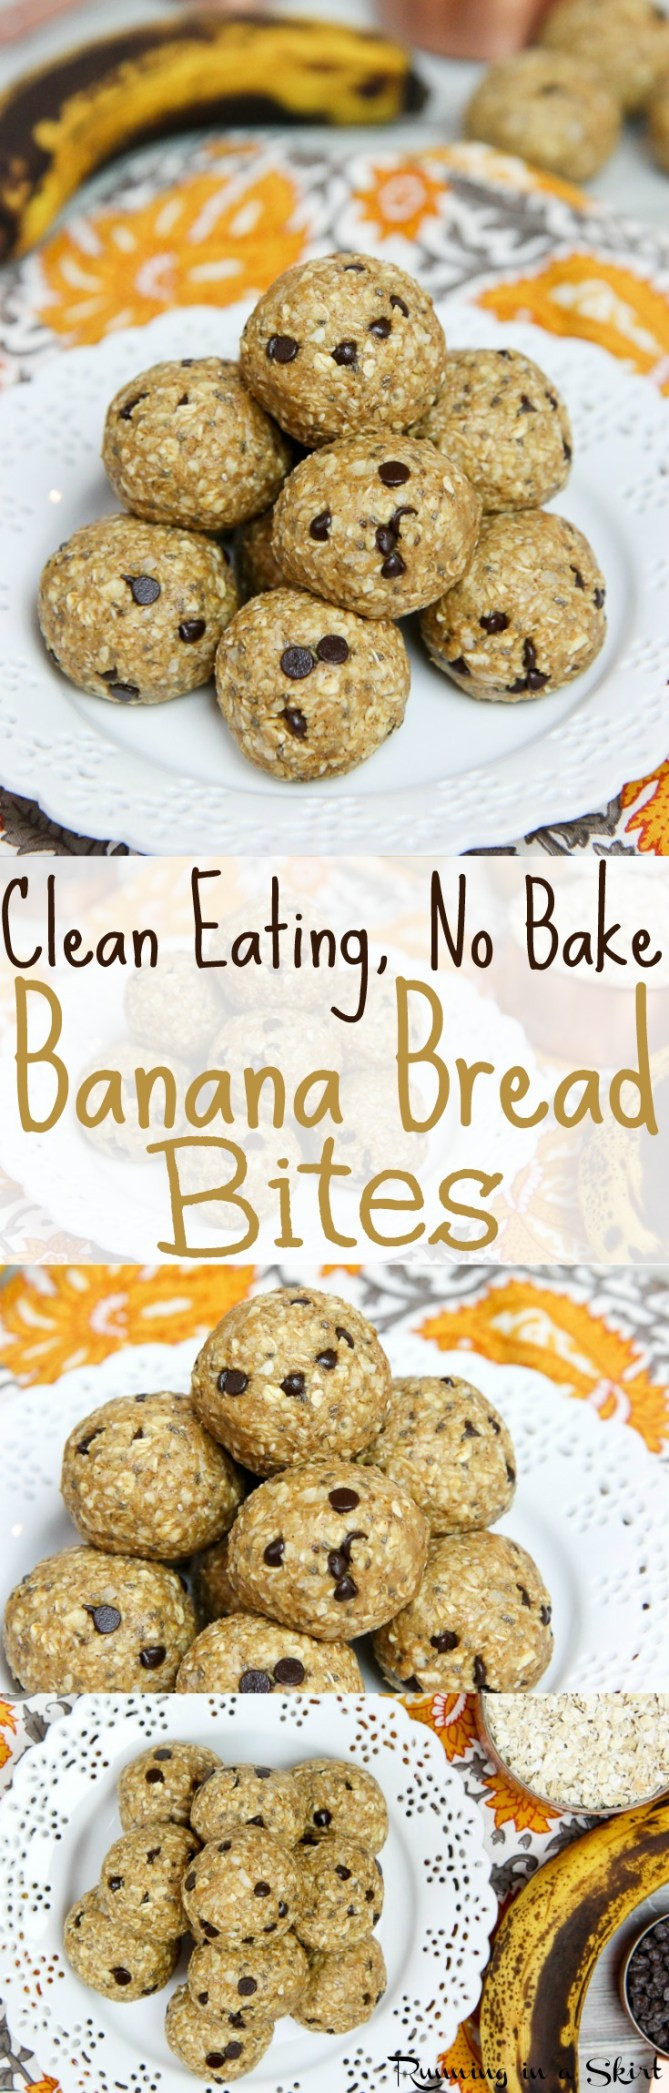 Clean Eating Banana Bread
 No Bake Banana Bread Bites recipe